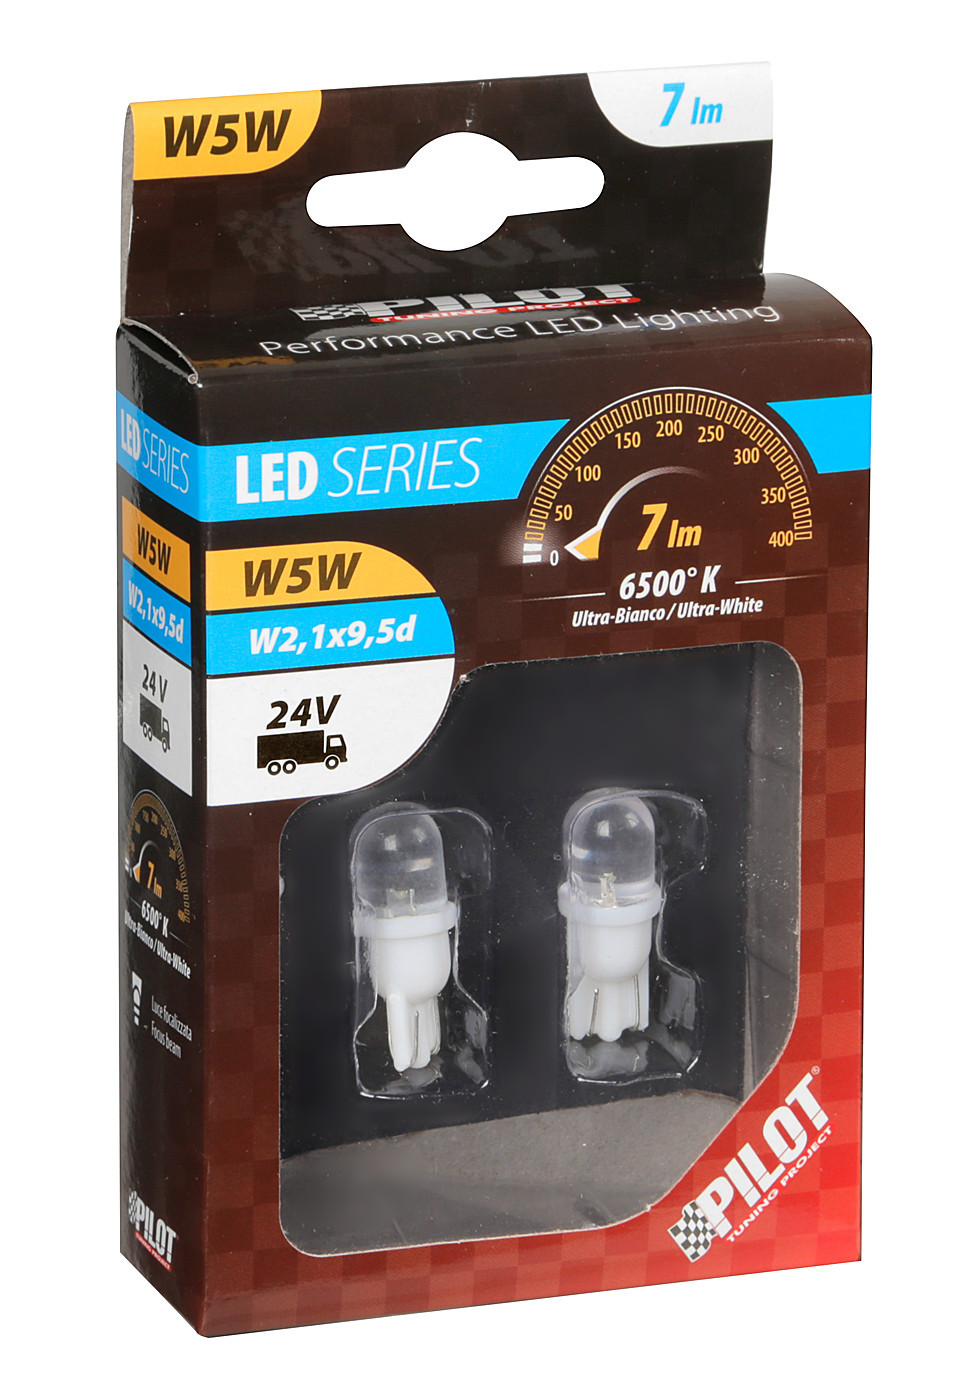 24V-os W5W W2,1x9,5d foglalatos LED égő - 2 darabos-Fehér thumb